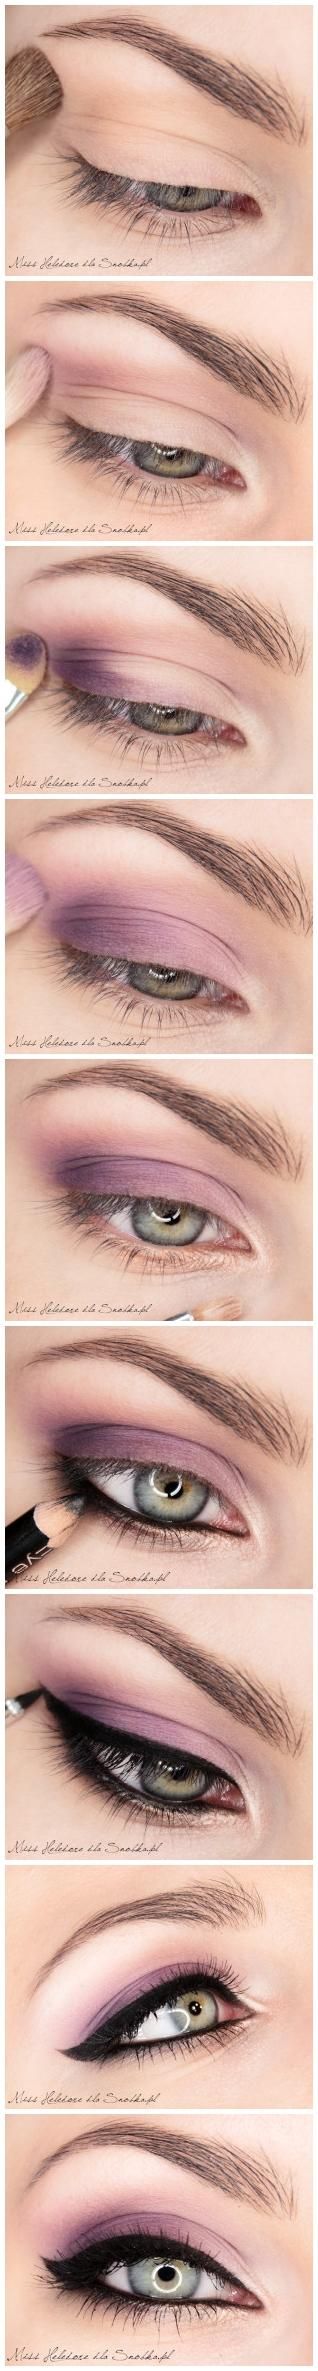 eyeliner + purple eye shadow